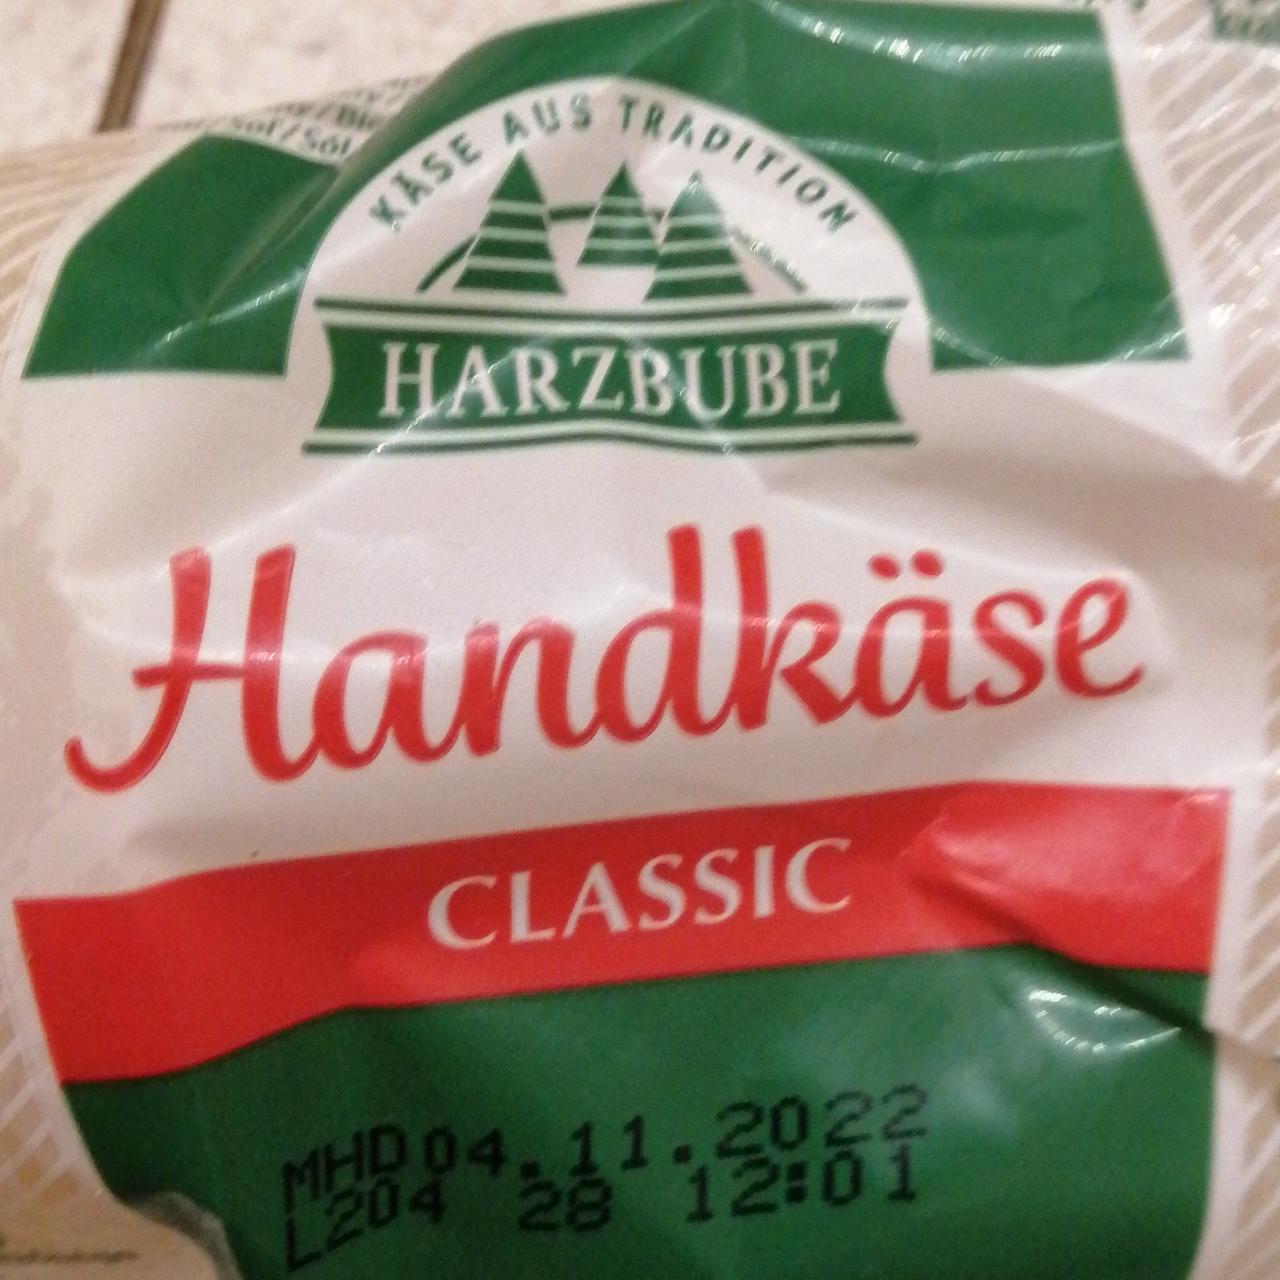 Фото - Handkase сыр тваружки Harzbube